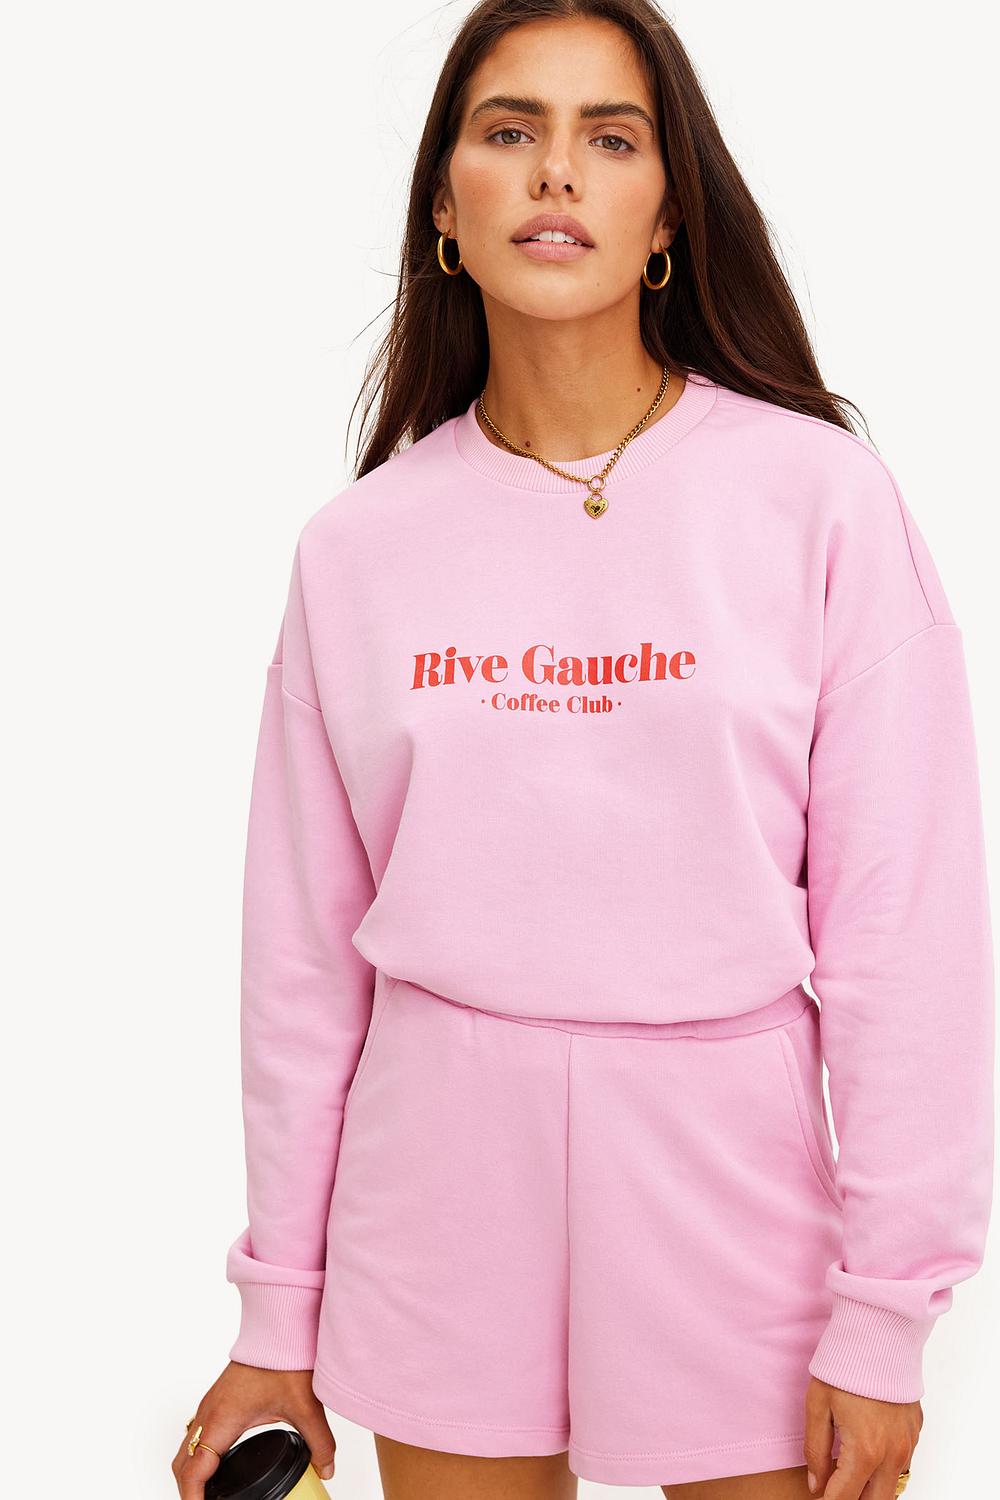 Light pink sweater